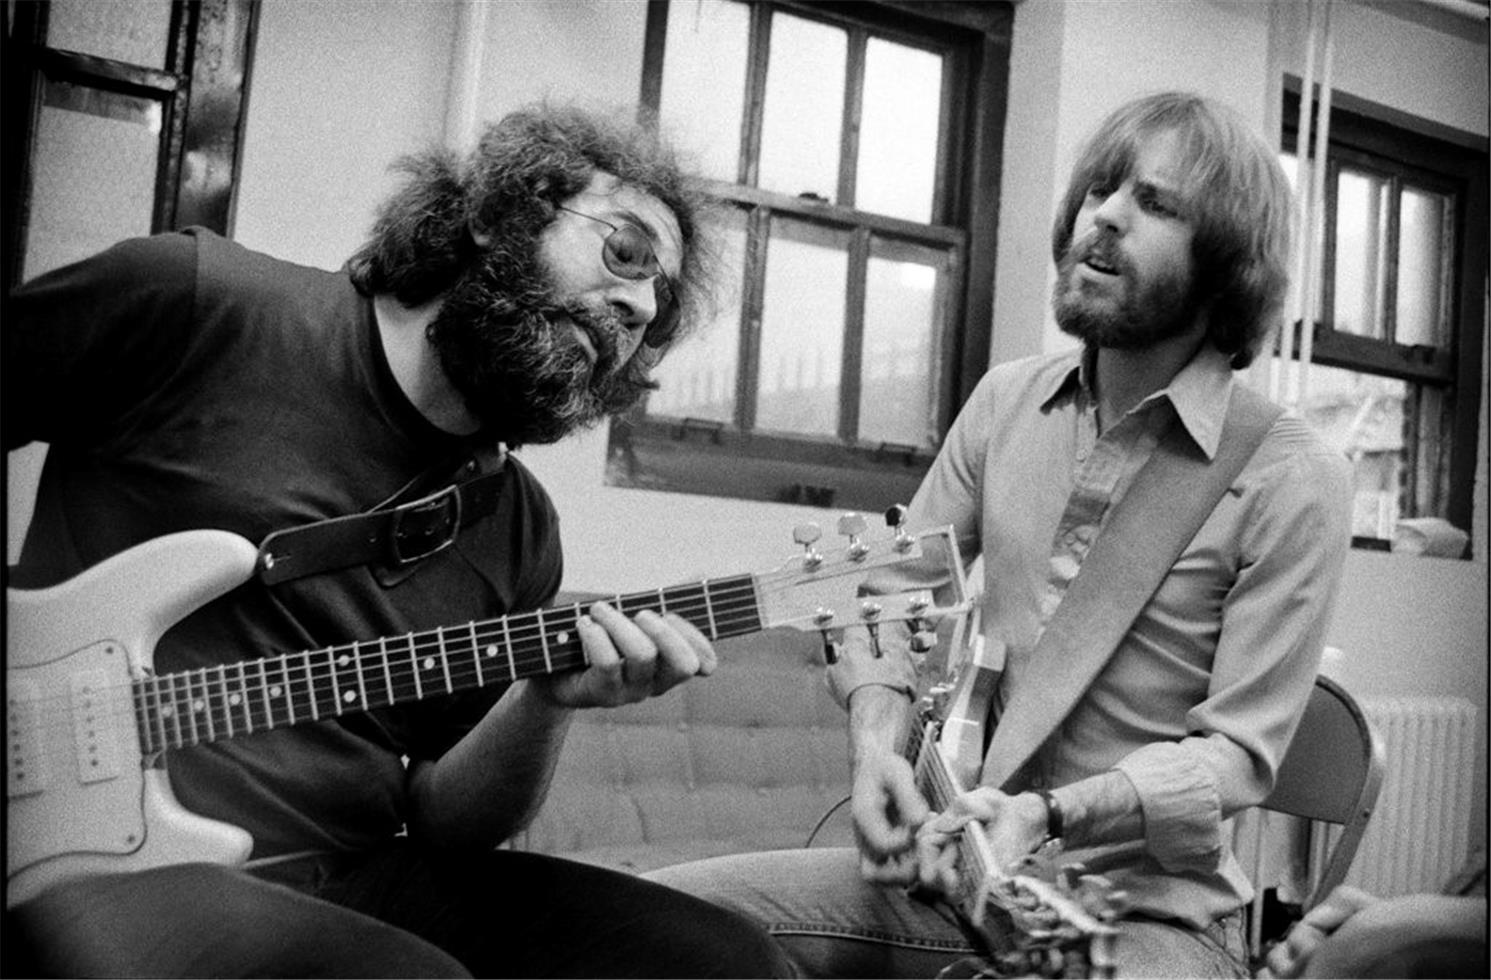 Peter Simon Portrait Photograph - Jerry Garcia and Bob Weir, Grateful Dead, NY, 1972